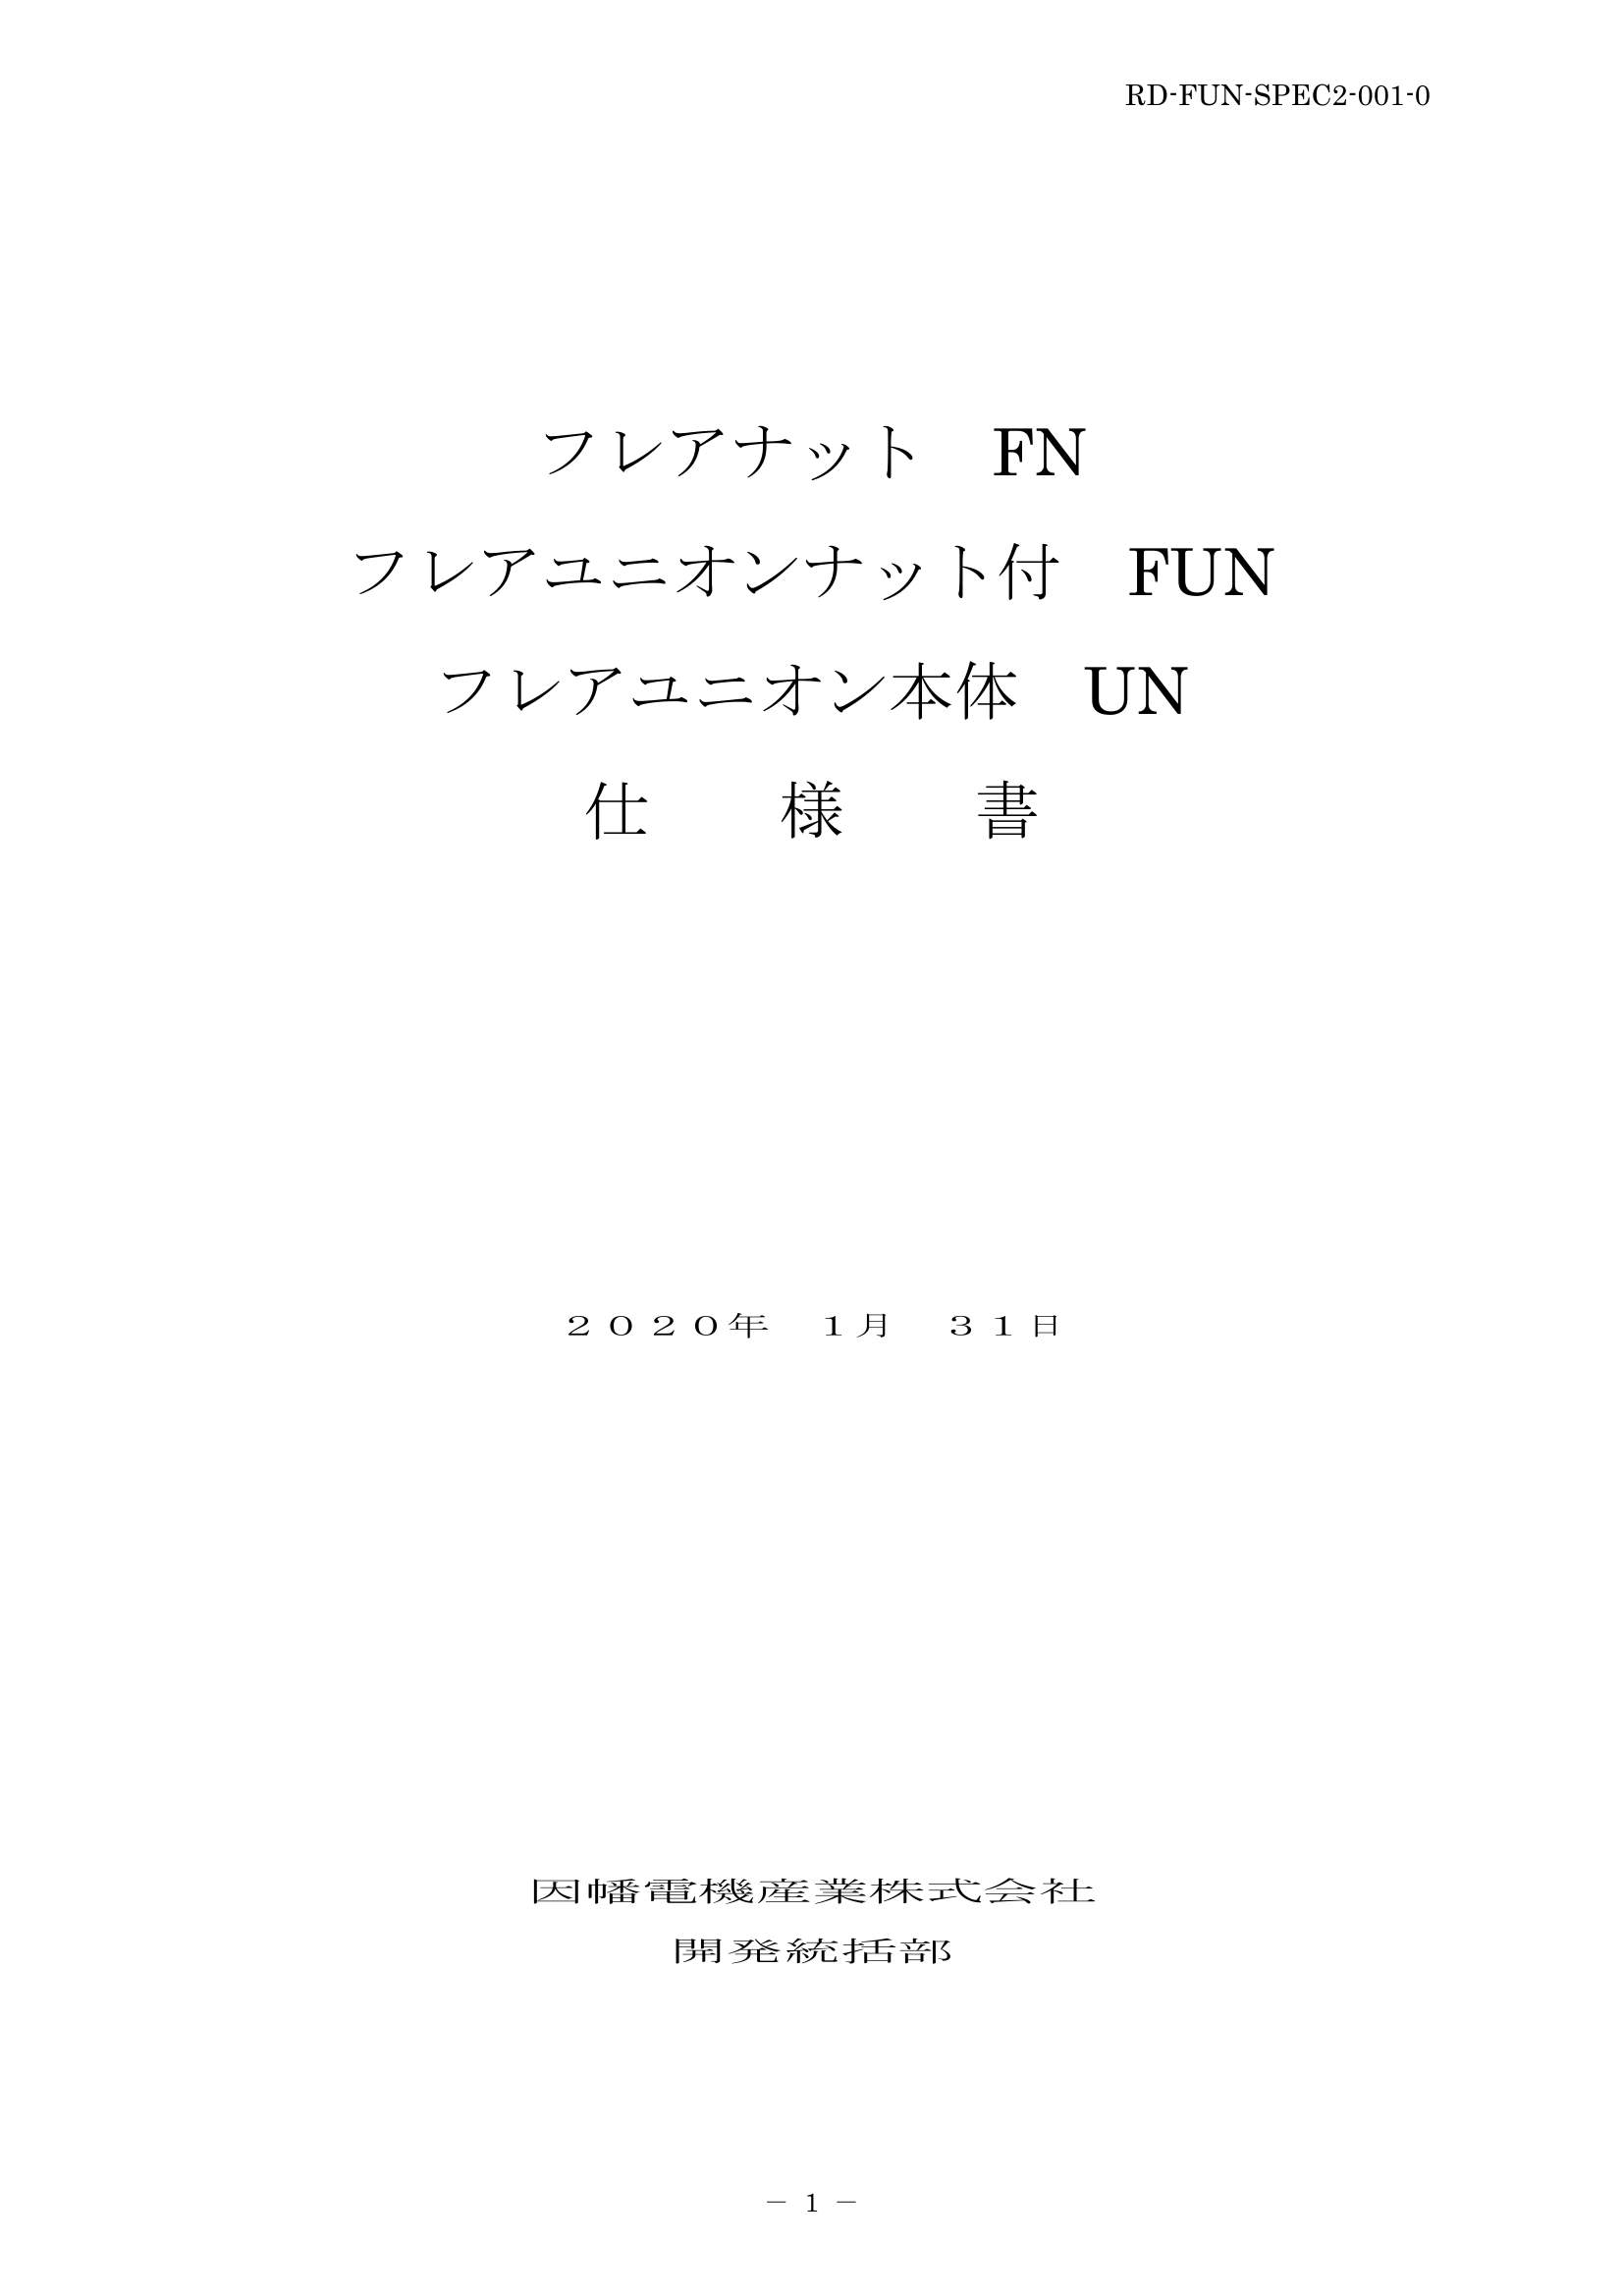 FN_FUN_UN_仕様書_20200131.pdf